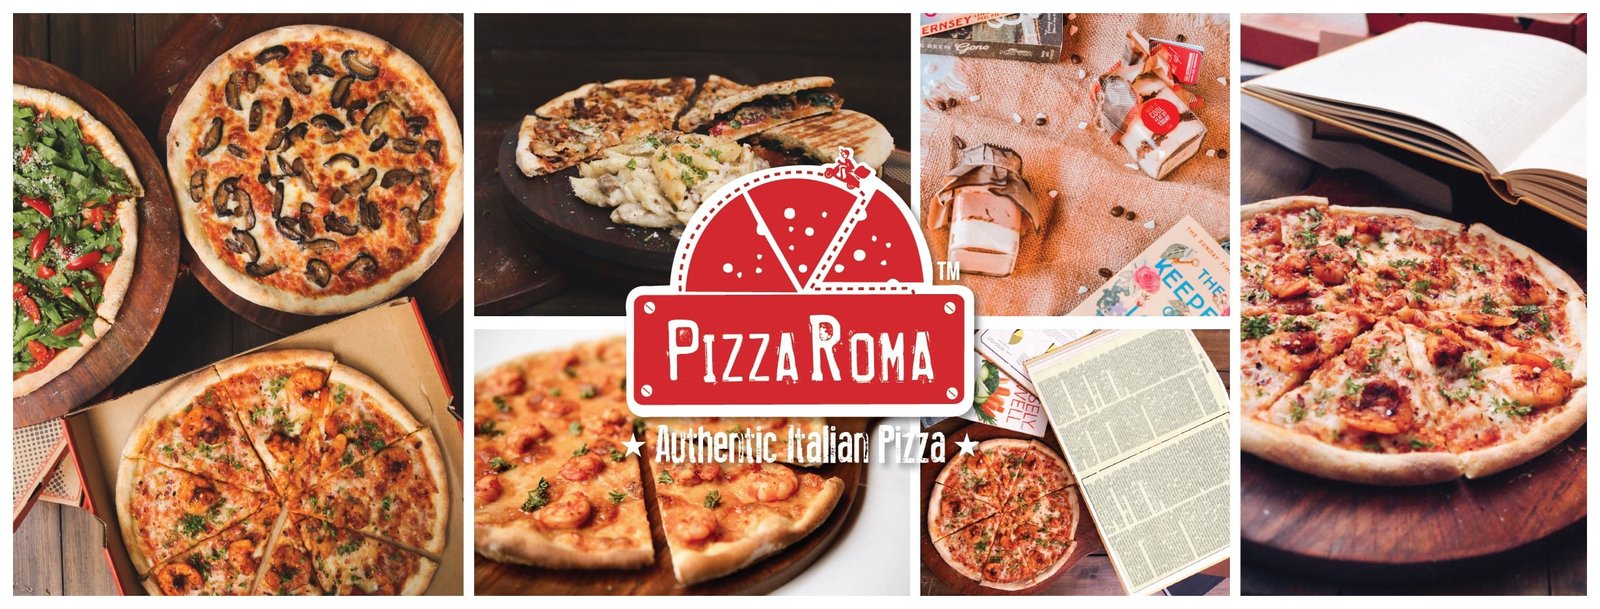 Pizza Roma food O'clock